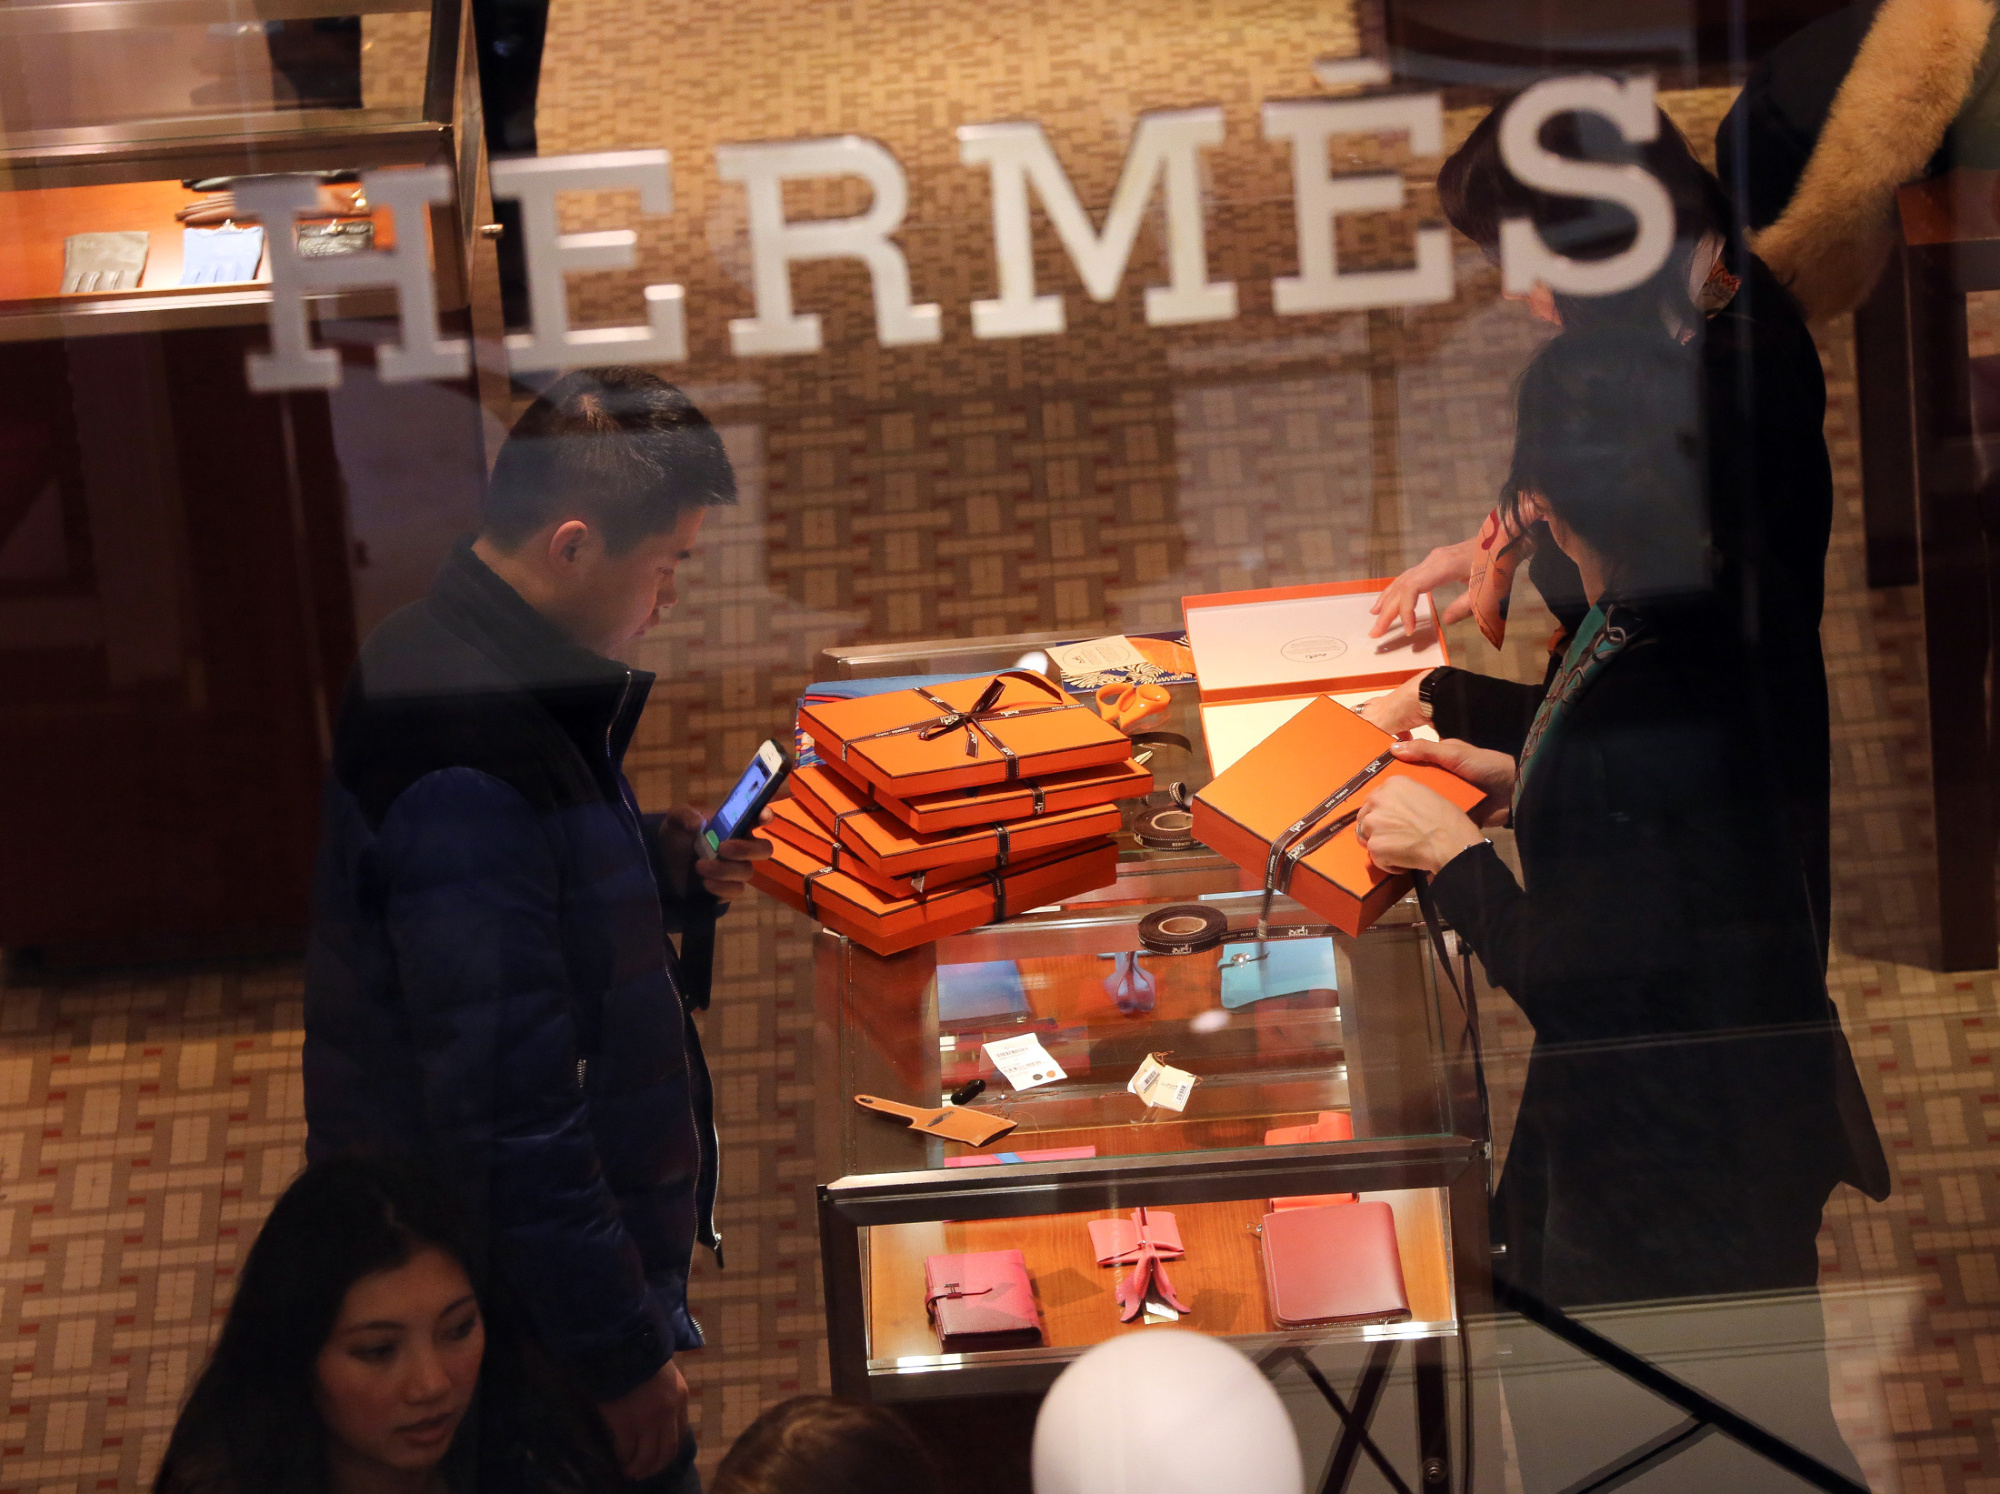 Hermes Sales Advance, Adding Evidence 